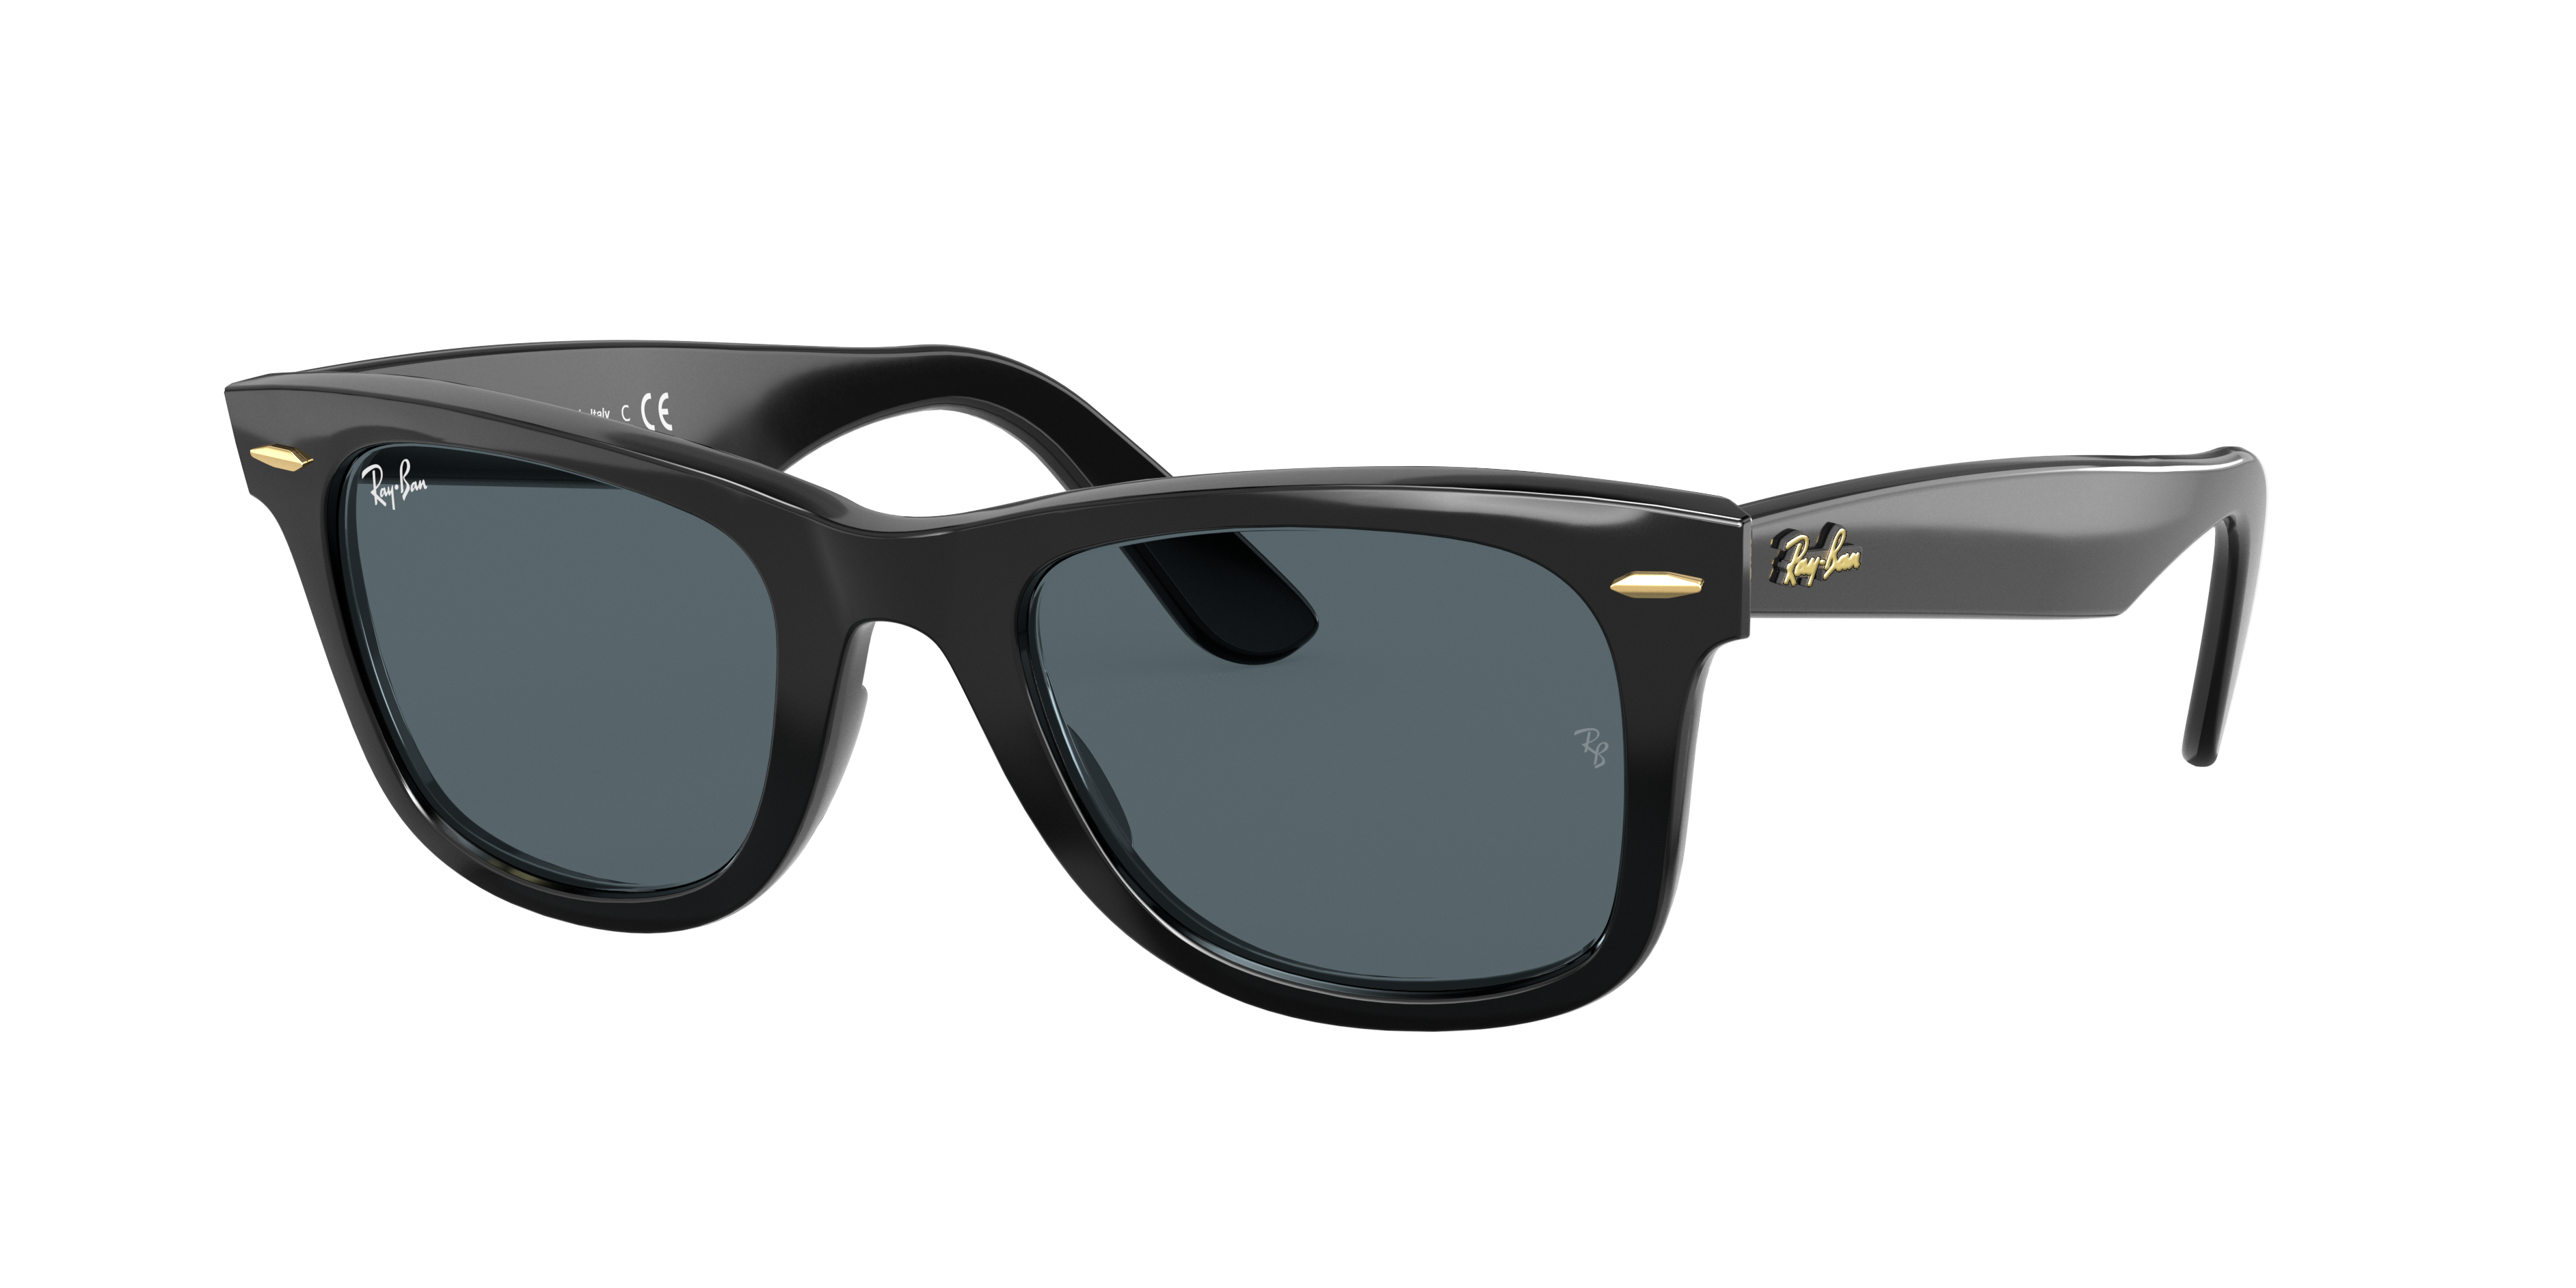 loyalitet Elegance protektor Original Wayfarer @collection Sunglasses in Black and Blue/Grey | Ray-Ban®